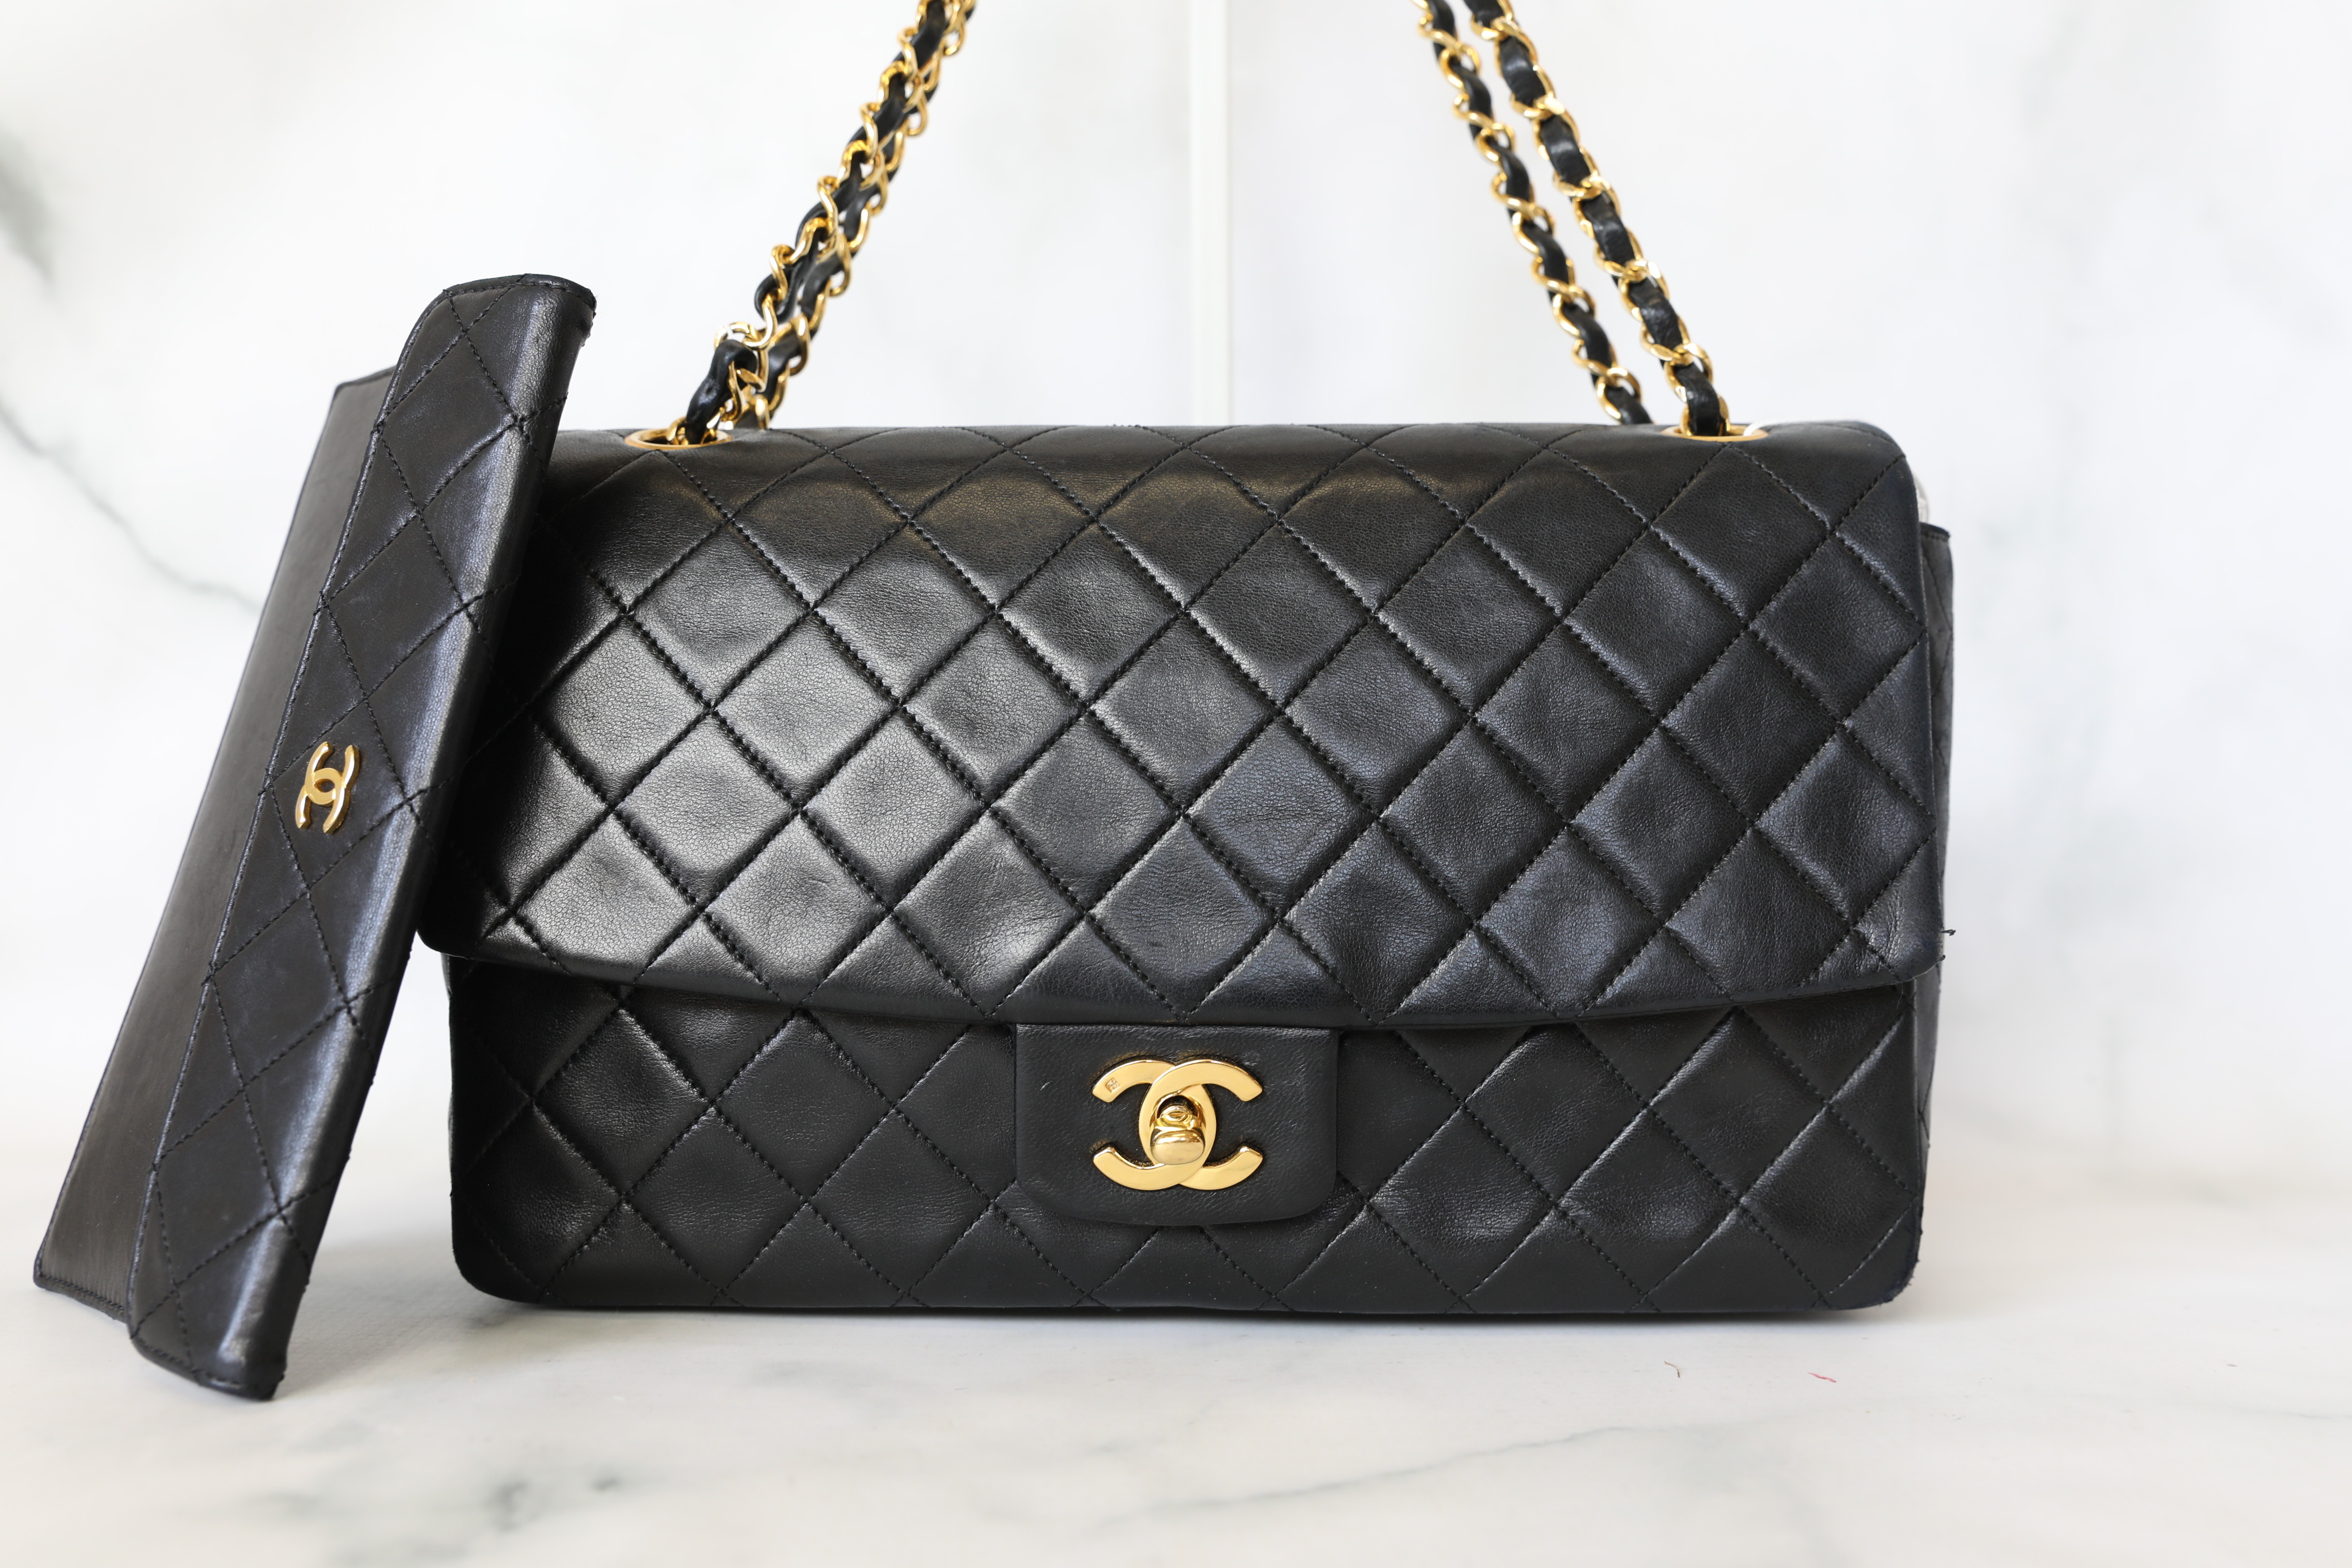 Chanel Vintage Vertical Messenger Bag, Black Lambskin Leather, Gold Plated  Hardware, Preowned - No Dustbag - Julia Rose Boston